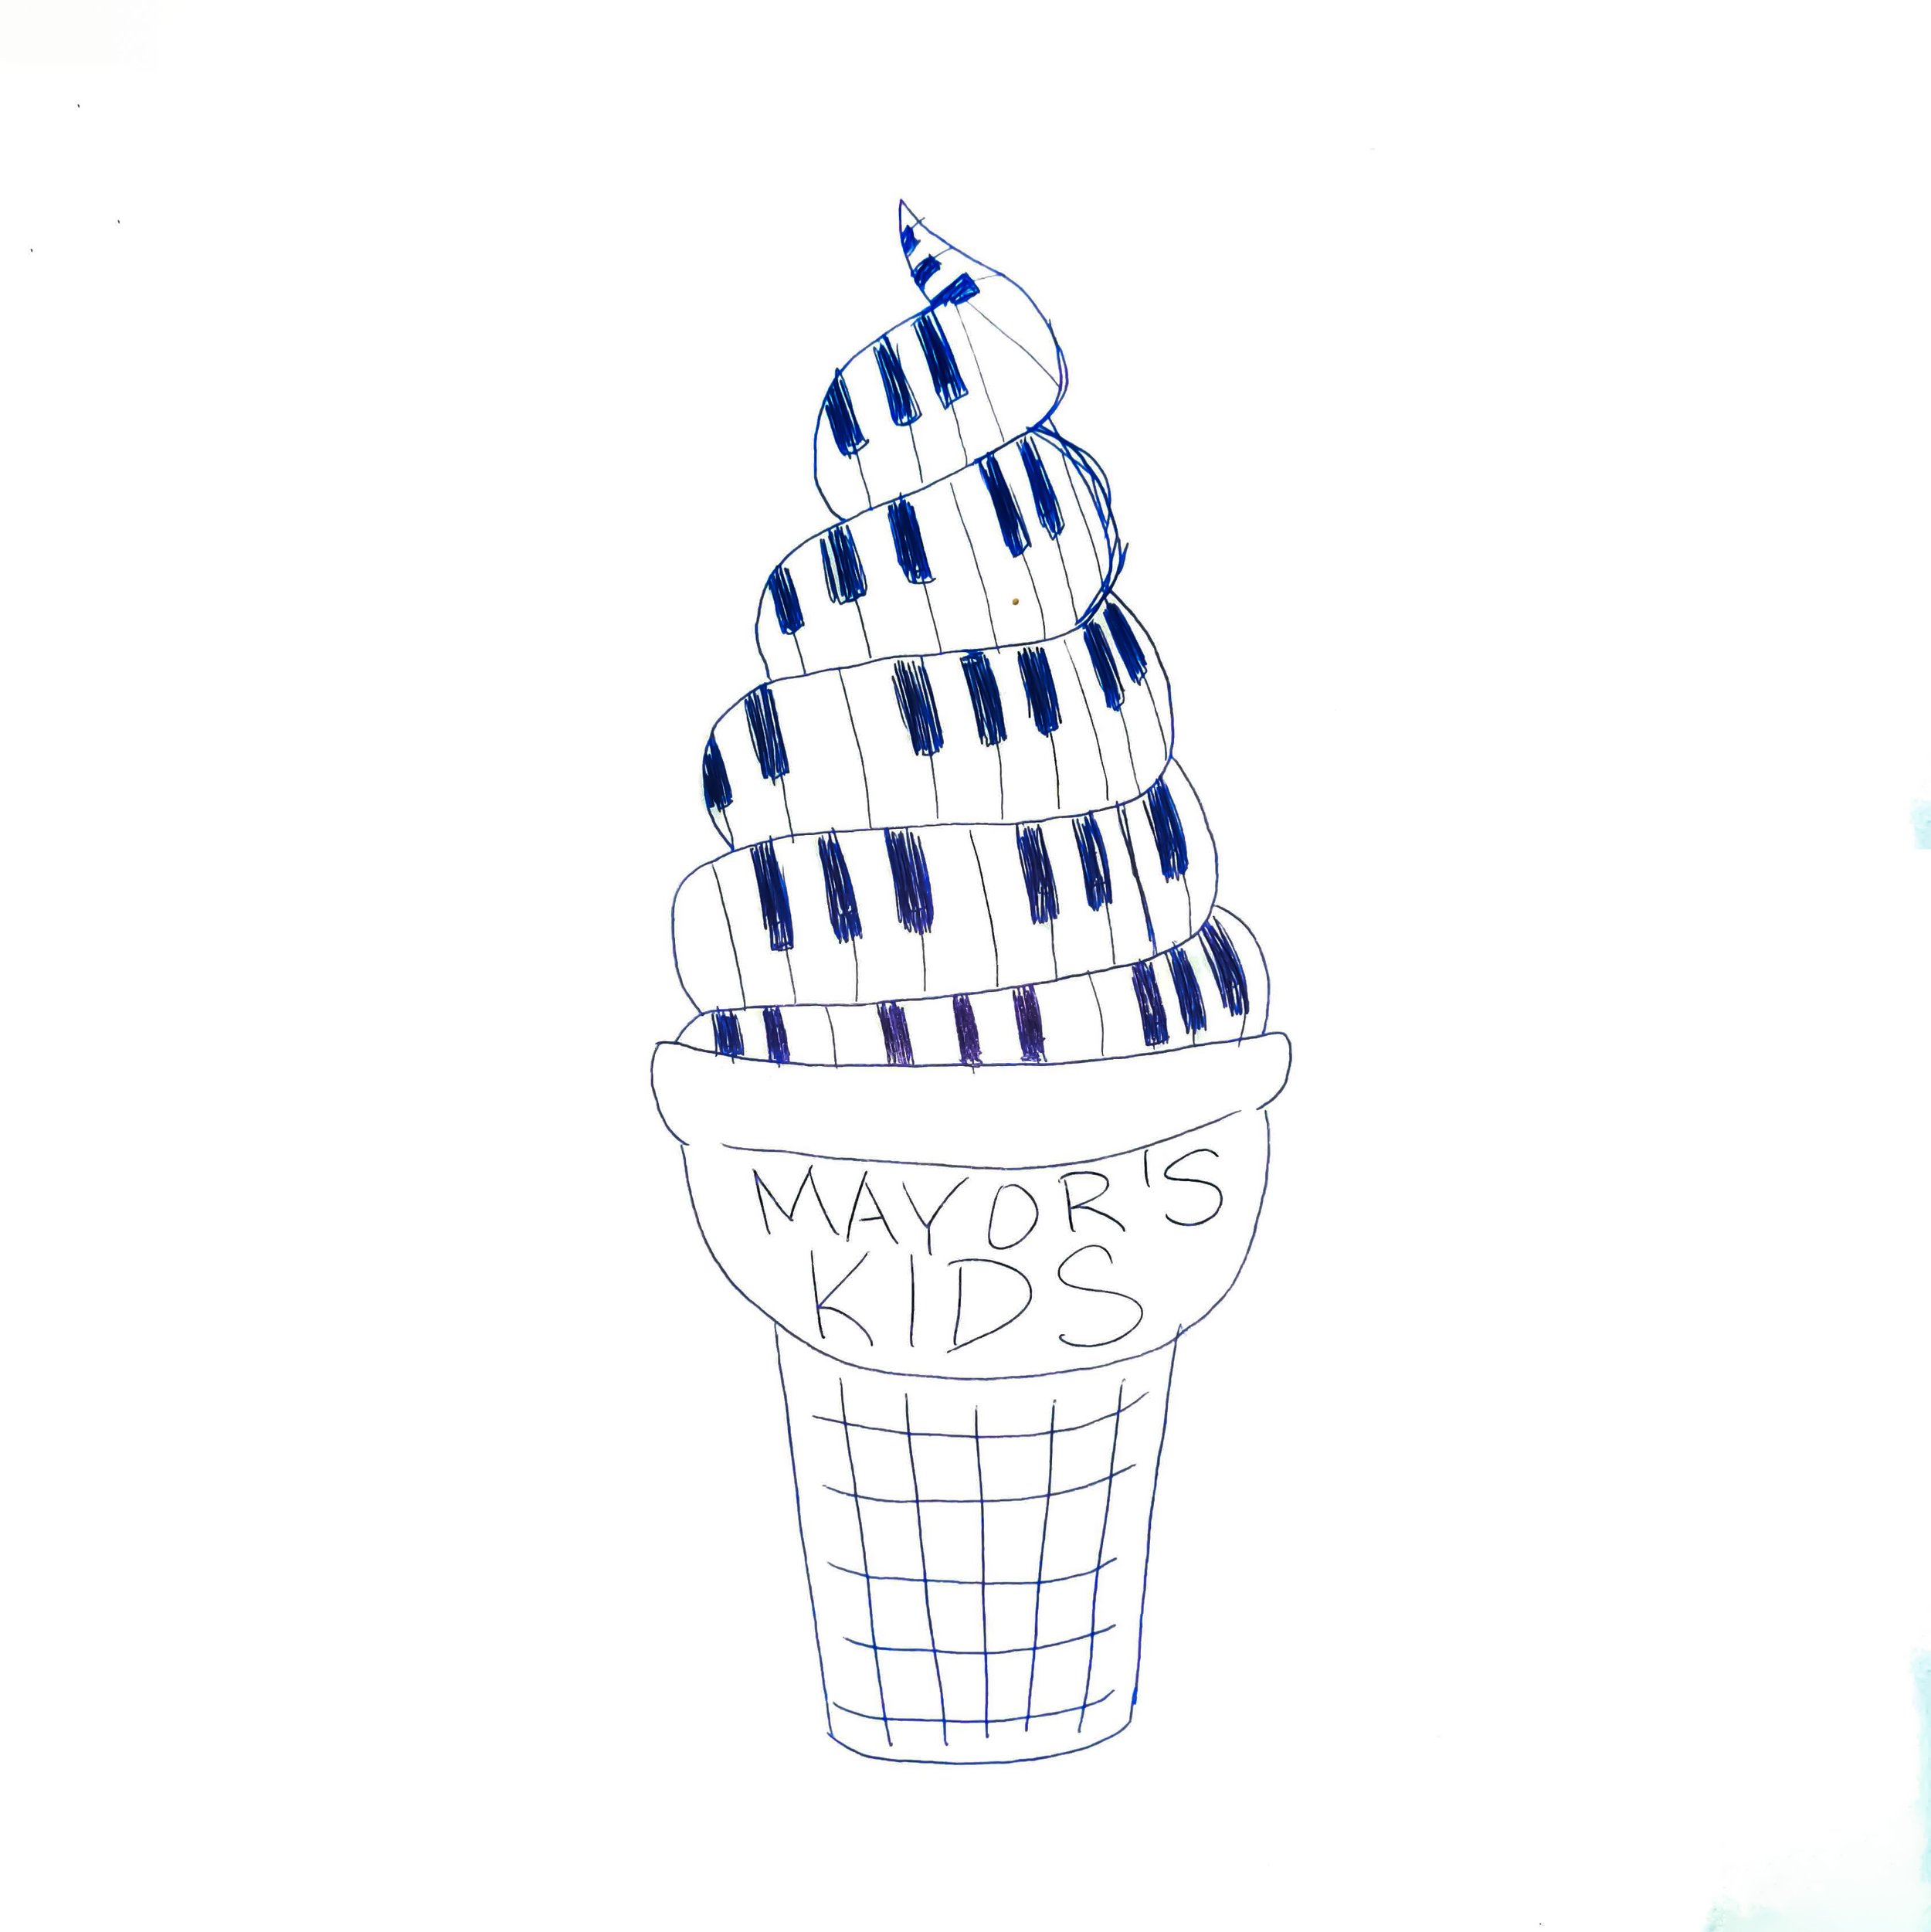 mayors-kids-sketches_Page_1.jpg